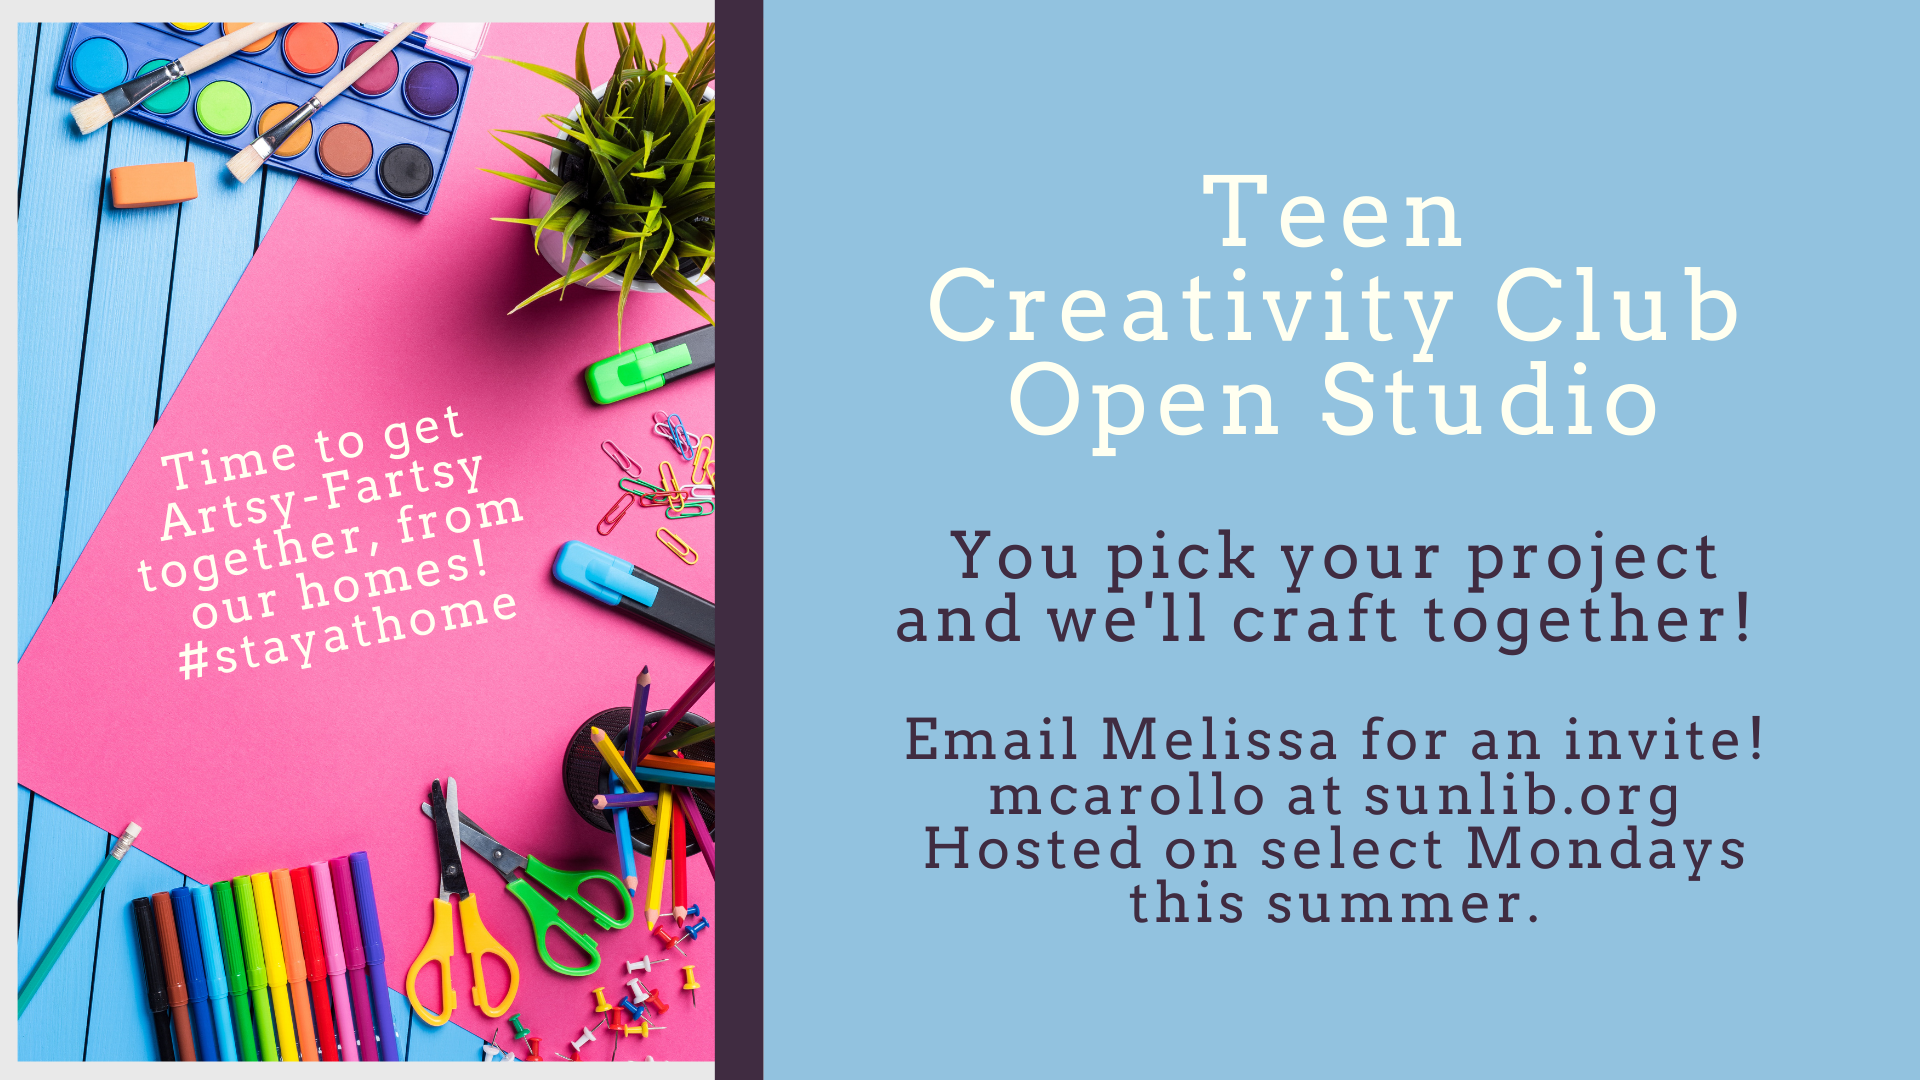 art supplies and advertising for teen creativity club program